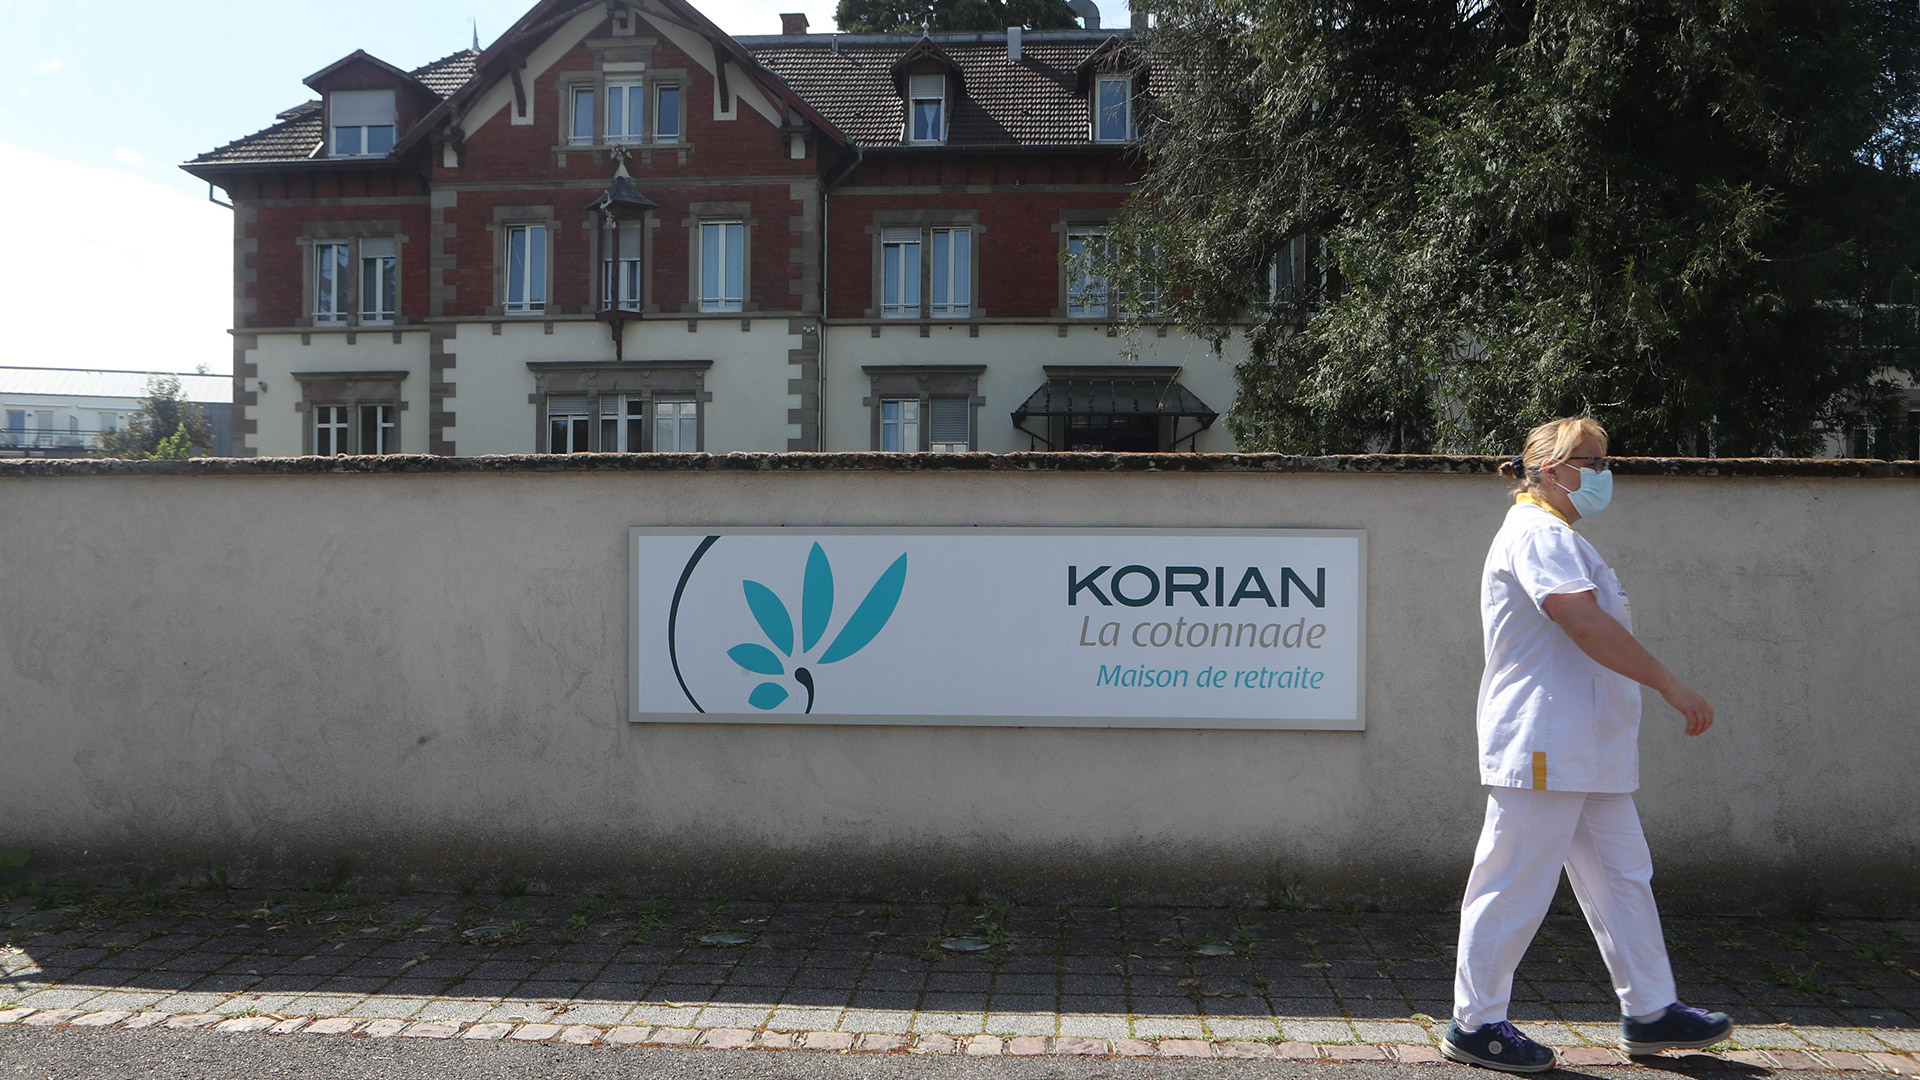 Korian Pflegeheim in Frankreich | picture alliance/dpa/MAXPPP